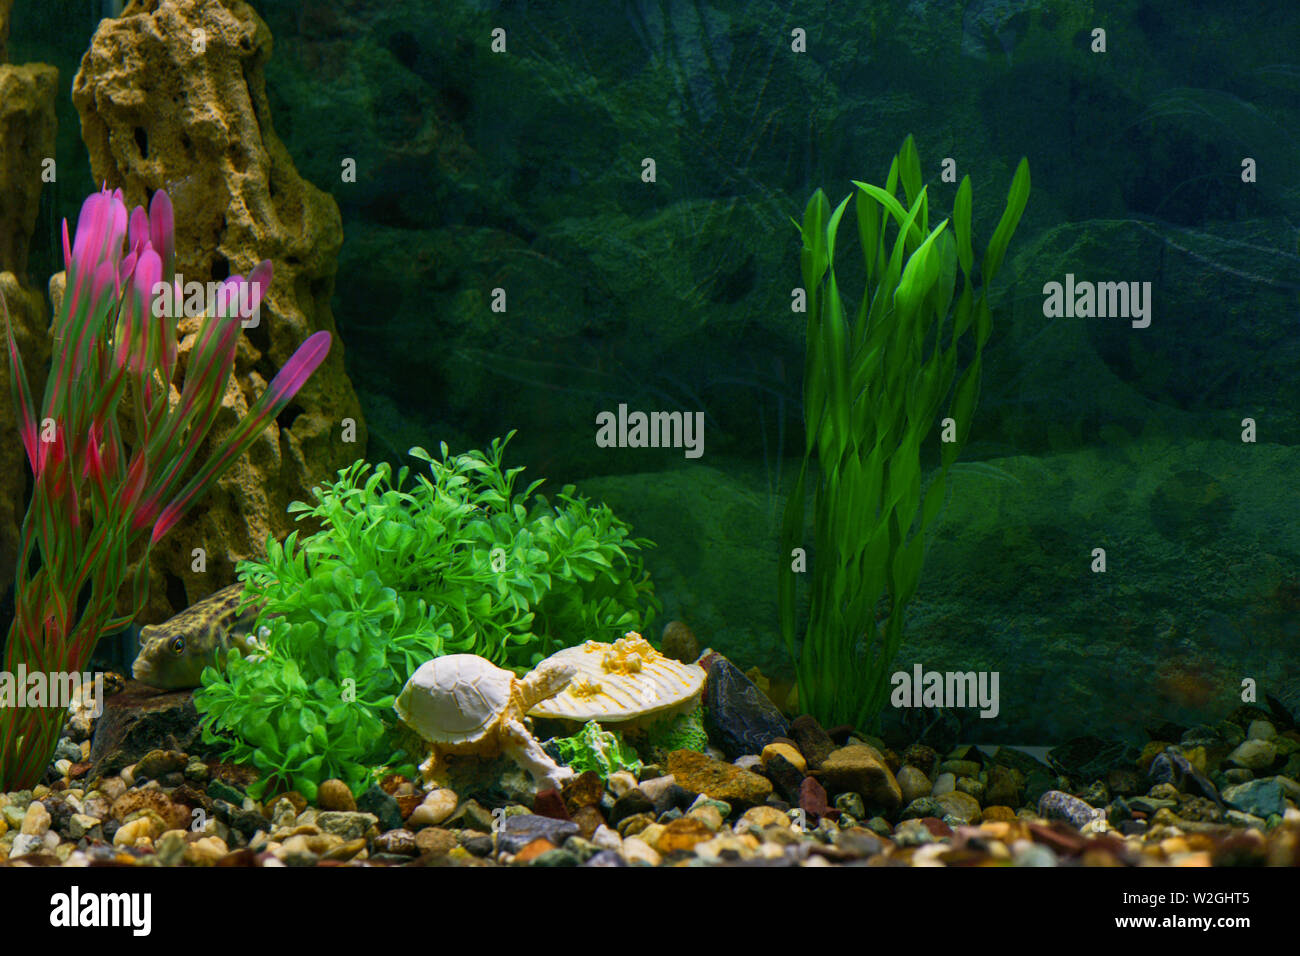 https://c8.alamy.com/comp/W2GHT5/beautiful-design-aquarium-decoration-artificial-plants-brown-soil-and-stone-rock-fish-ball-lying-on-a-stone-in-a-transparent-aquarium-W2GHT5.jpg